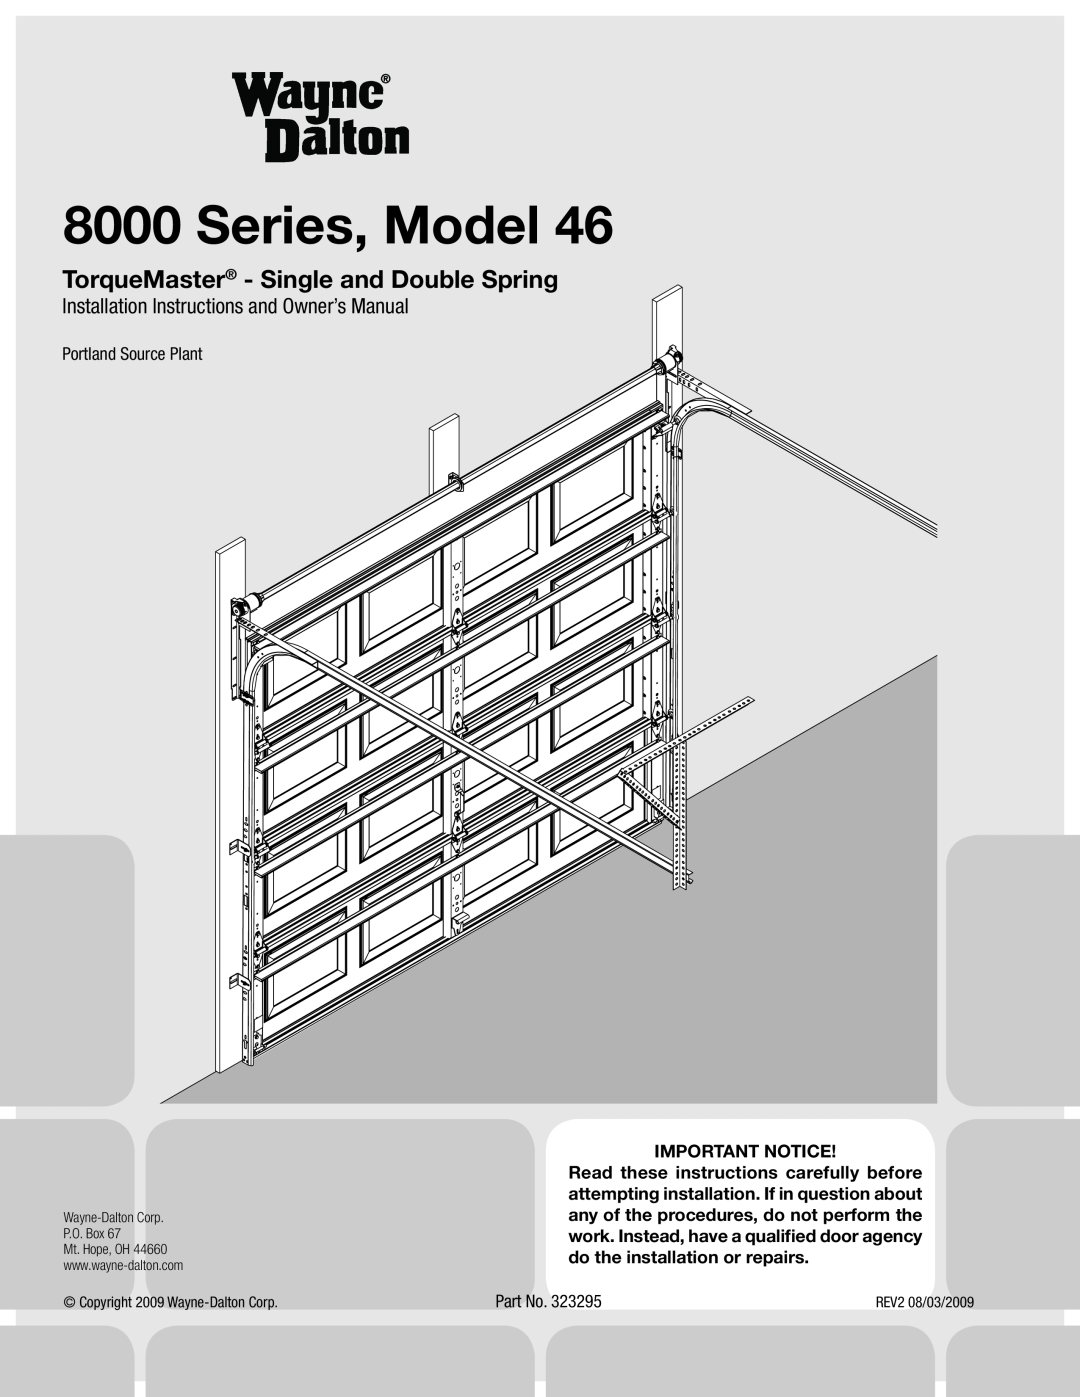 Wayne-Dalton 46 installation instructions Installation Instructions and Owner’s Manual, Series, Model 